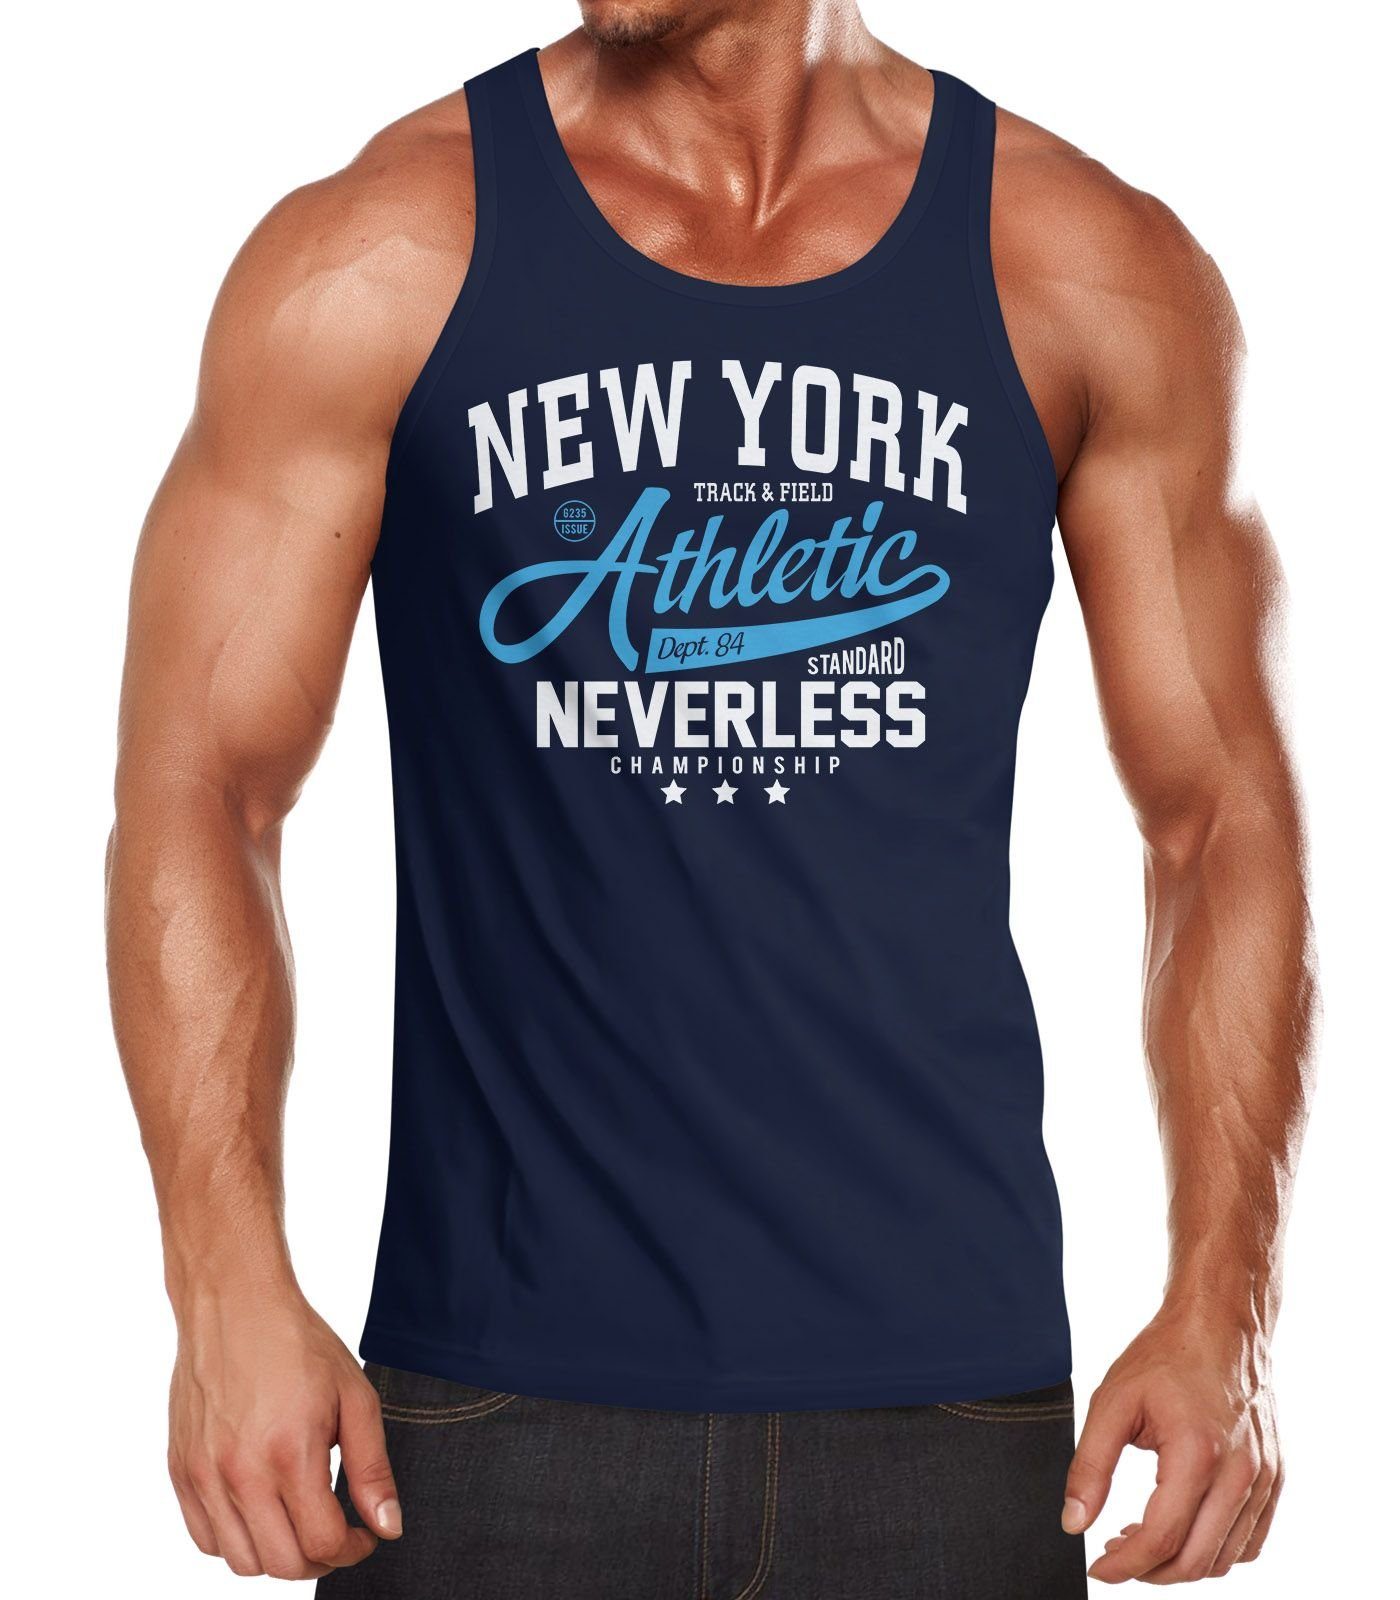 Neverless Tanktop »Herren Tank-Top New York Athletic Neverless®« mit Print  online kaufen | OTTO